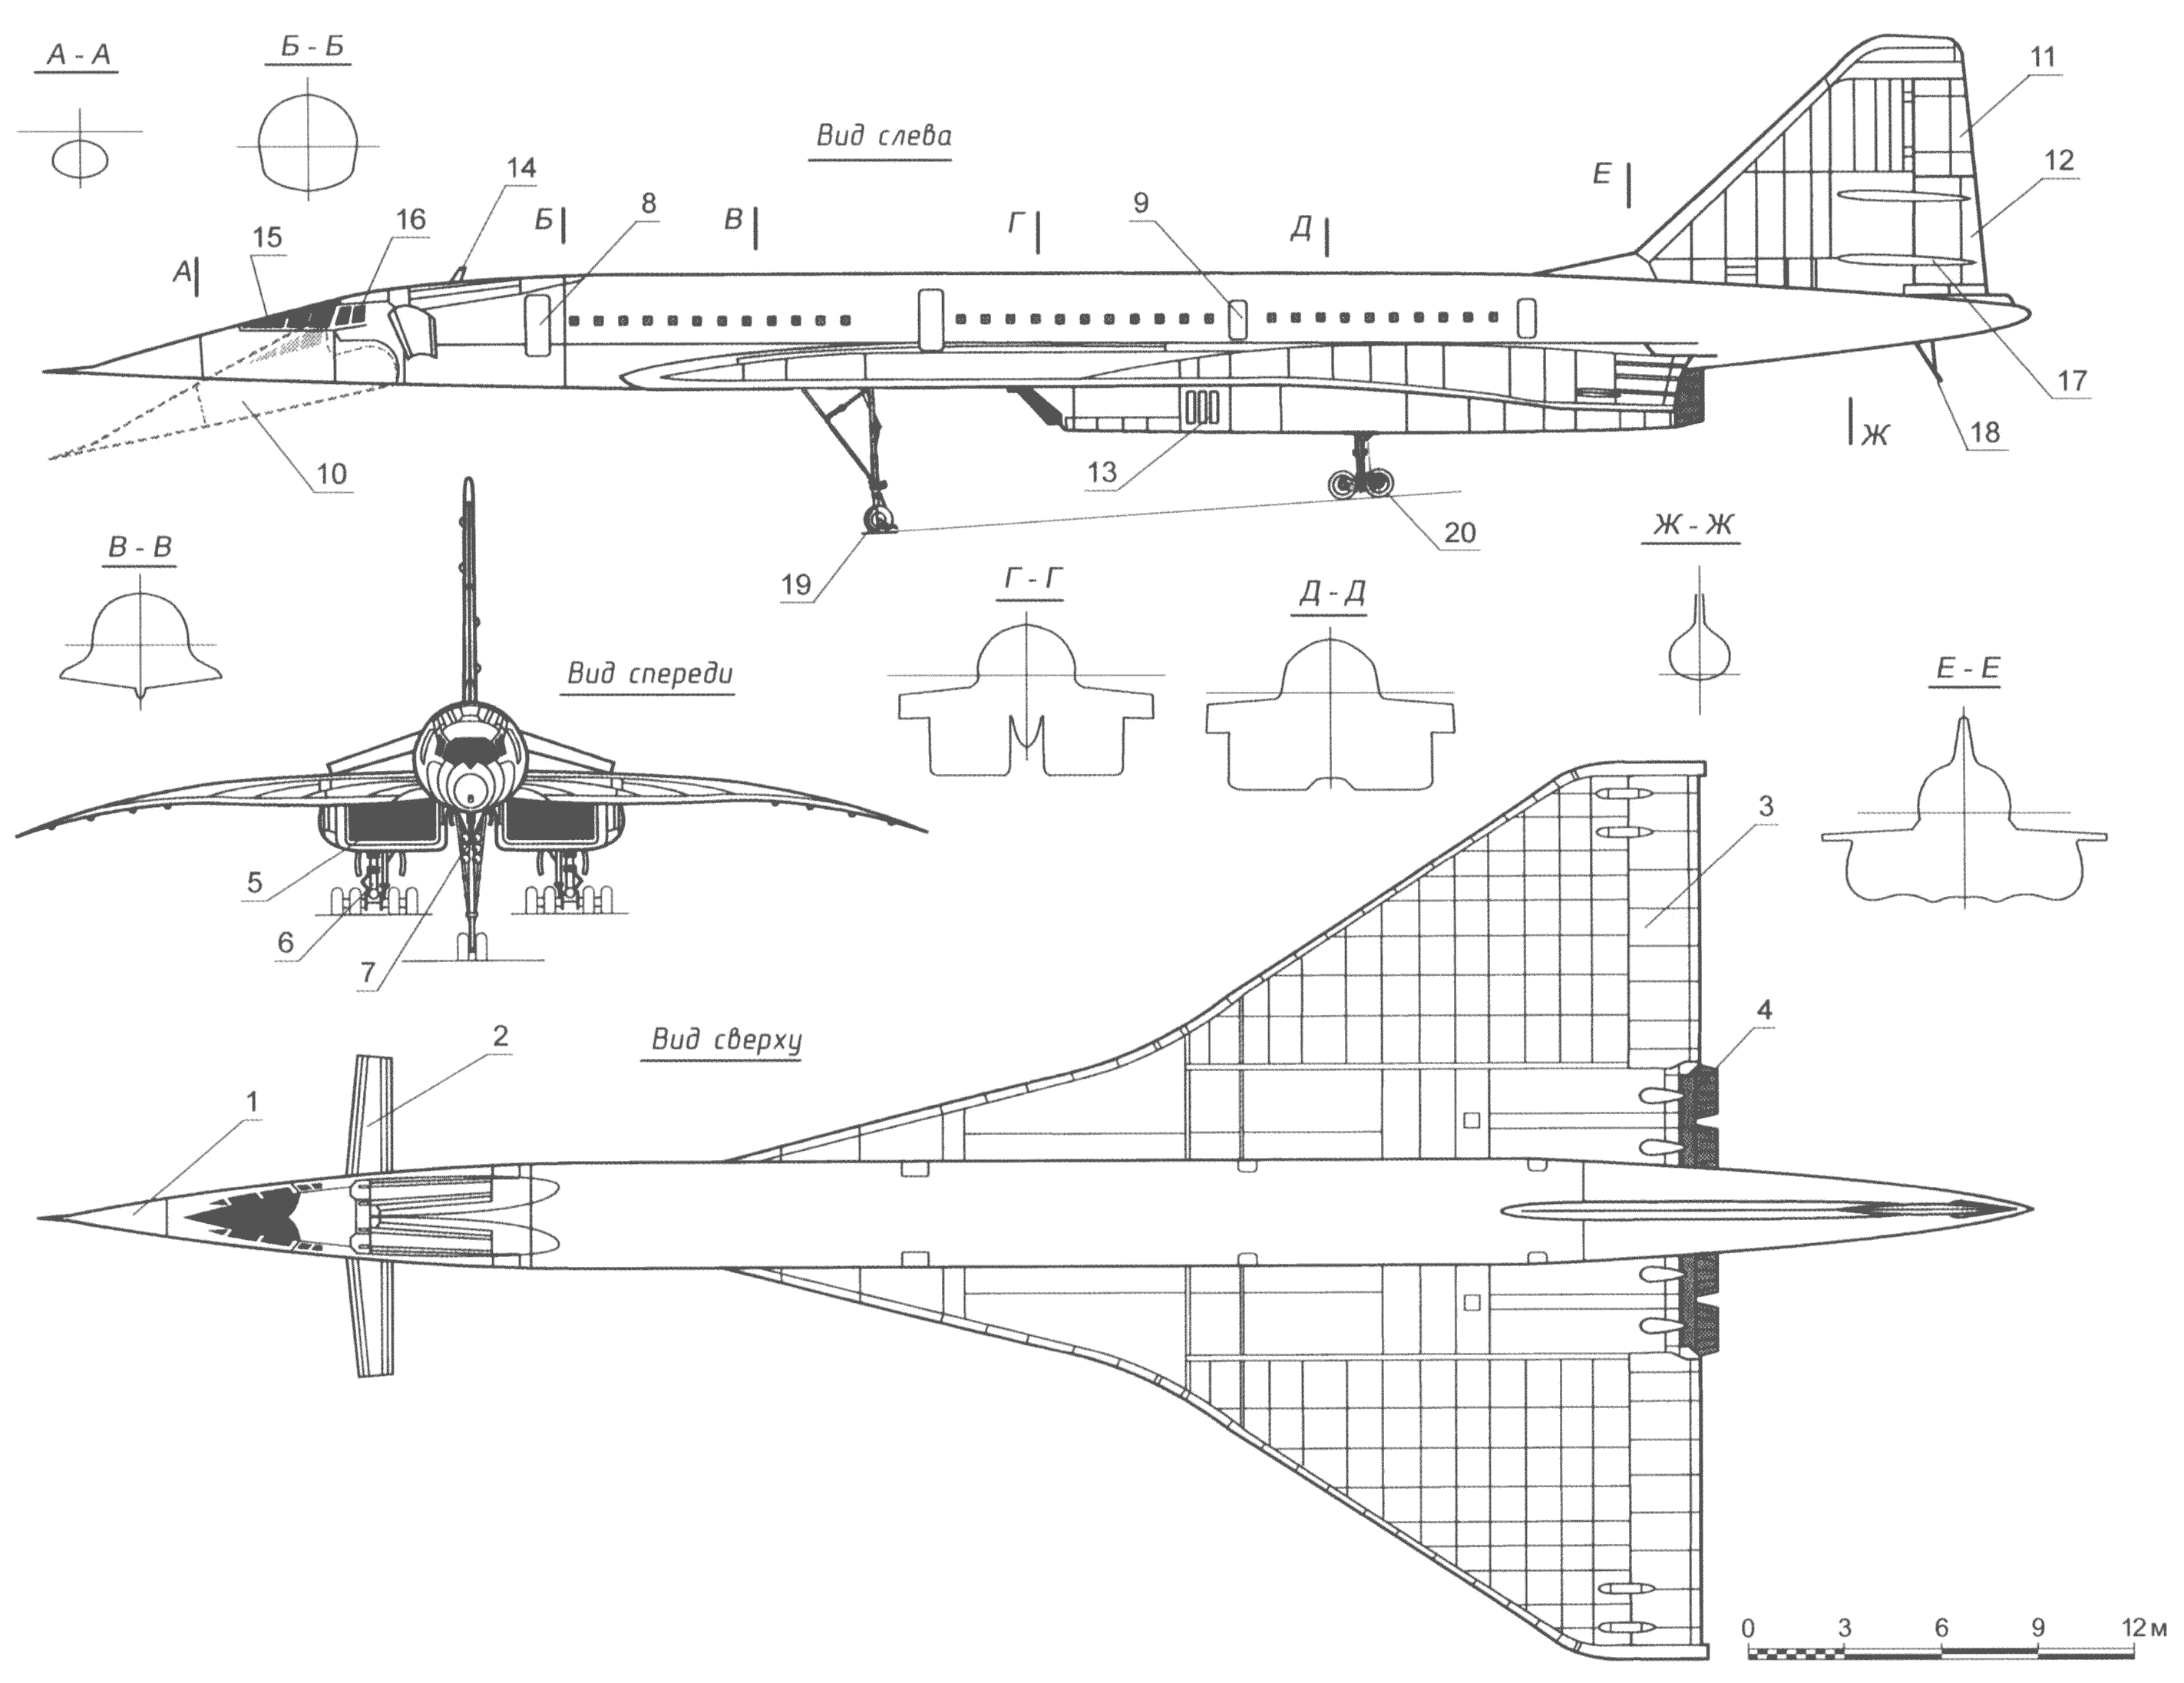 Tu-144 blueprint